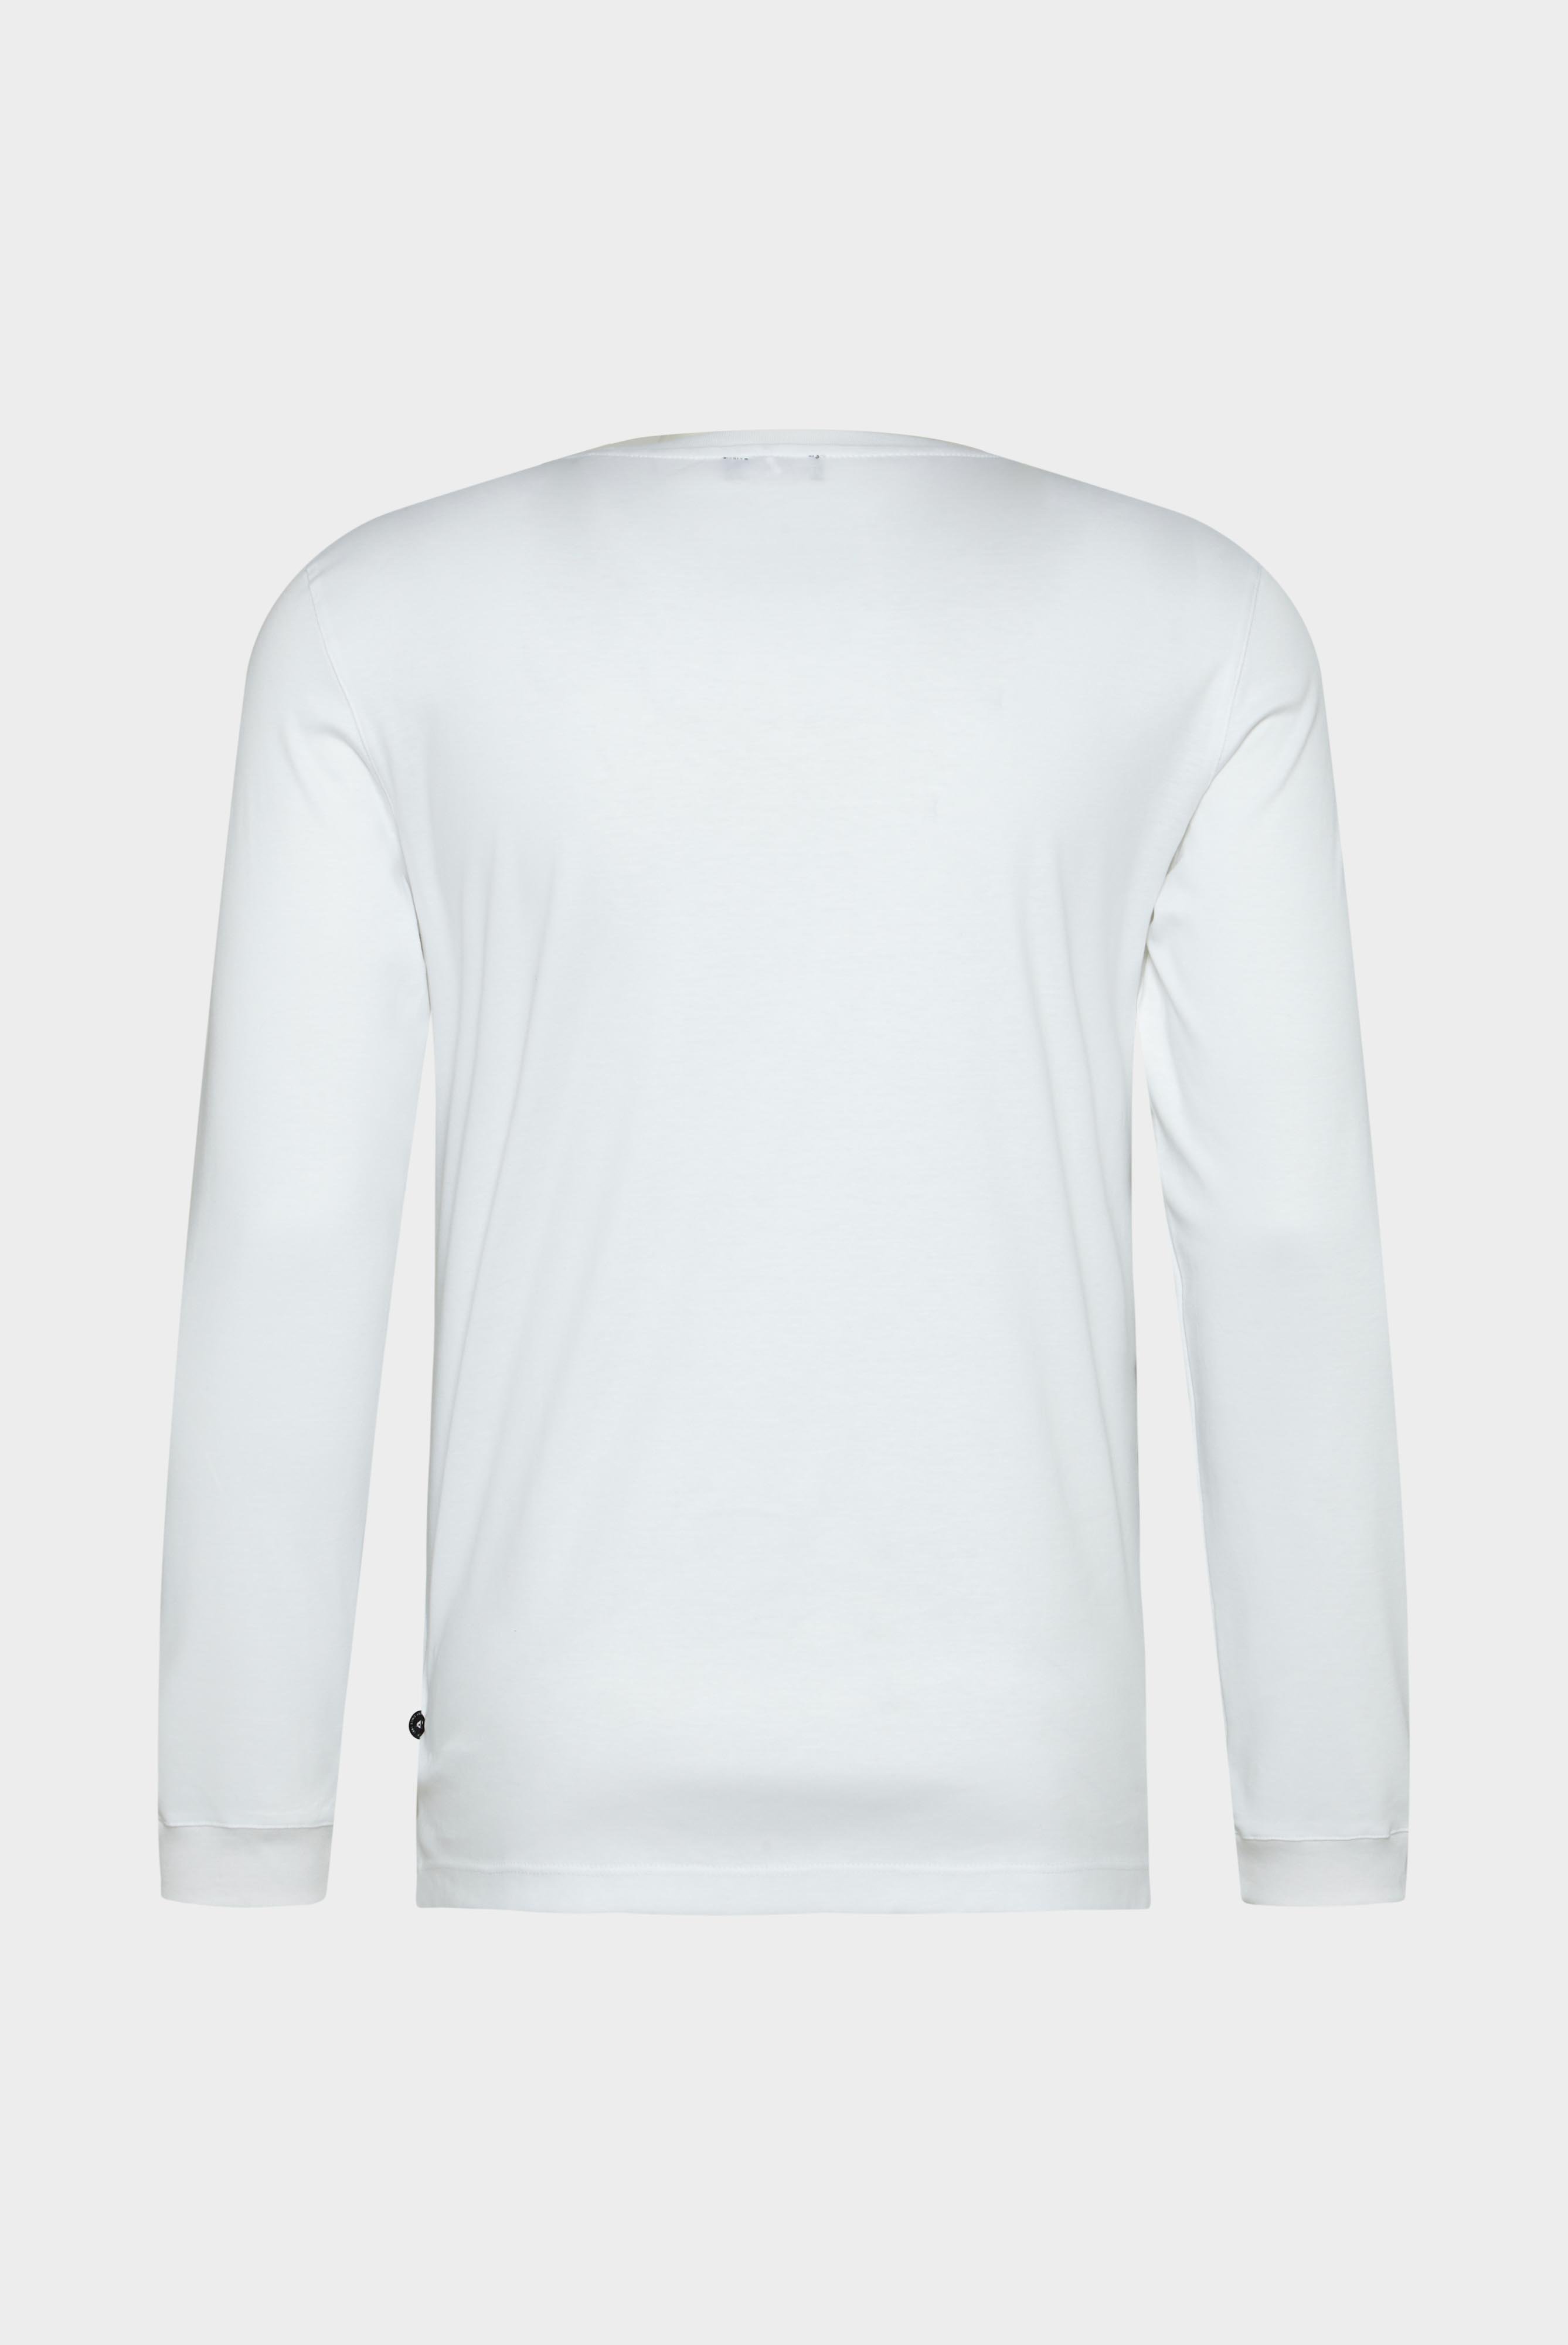 T-Shirts+Longsleeve Swiss Cotton Jersey Crew Neck T-Shirt+20.1718.UX.180031.000.M